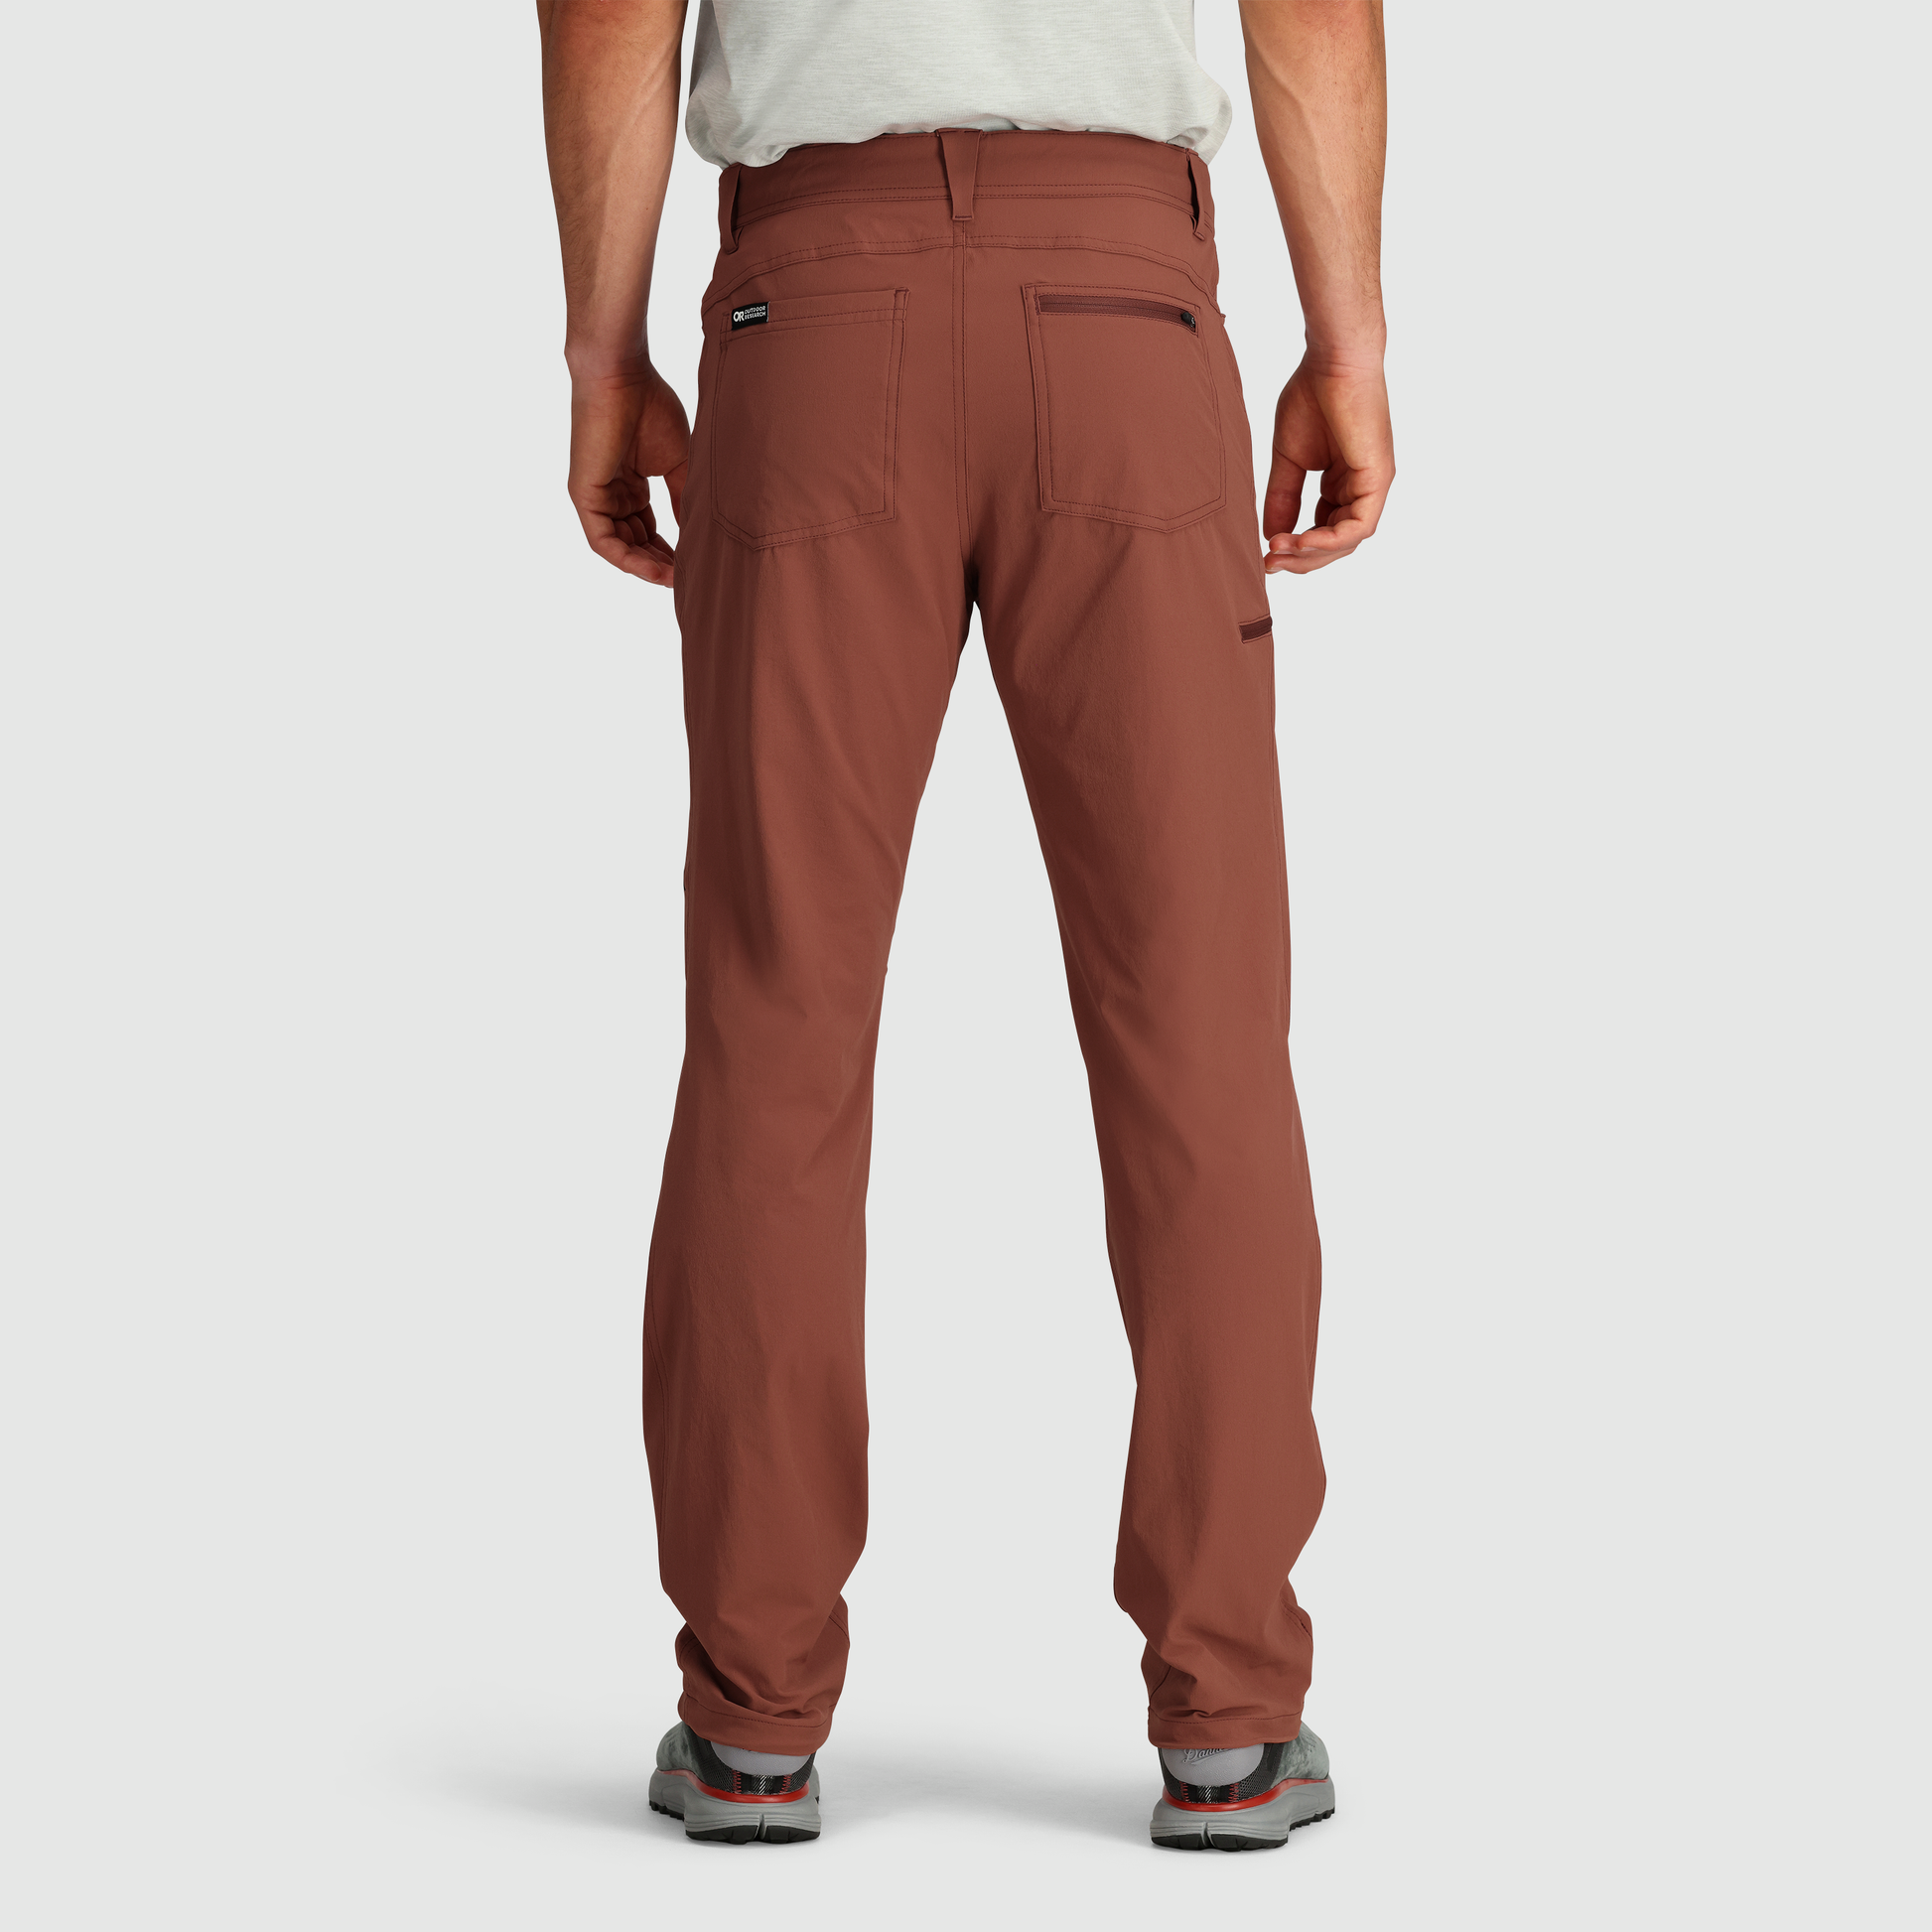 Outdoor Research Men's Ferrosi Pants - 32 Inseam - Pro Khaki, 38